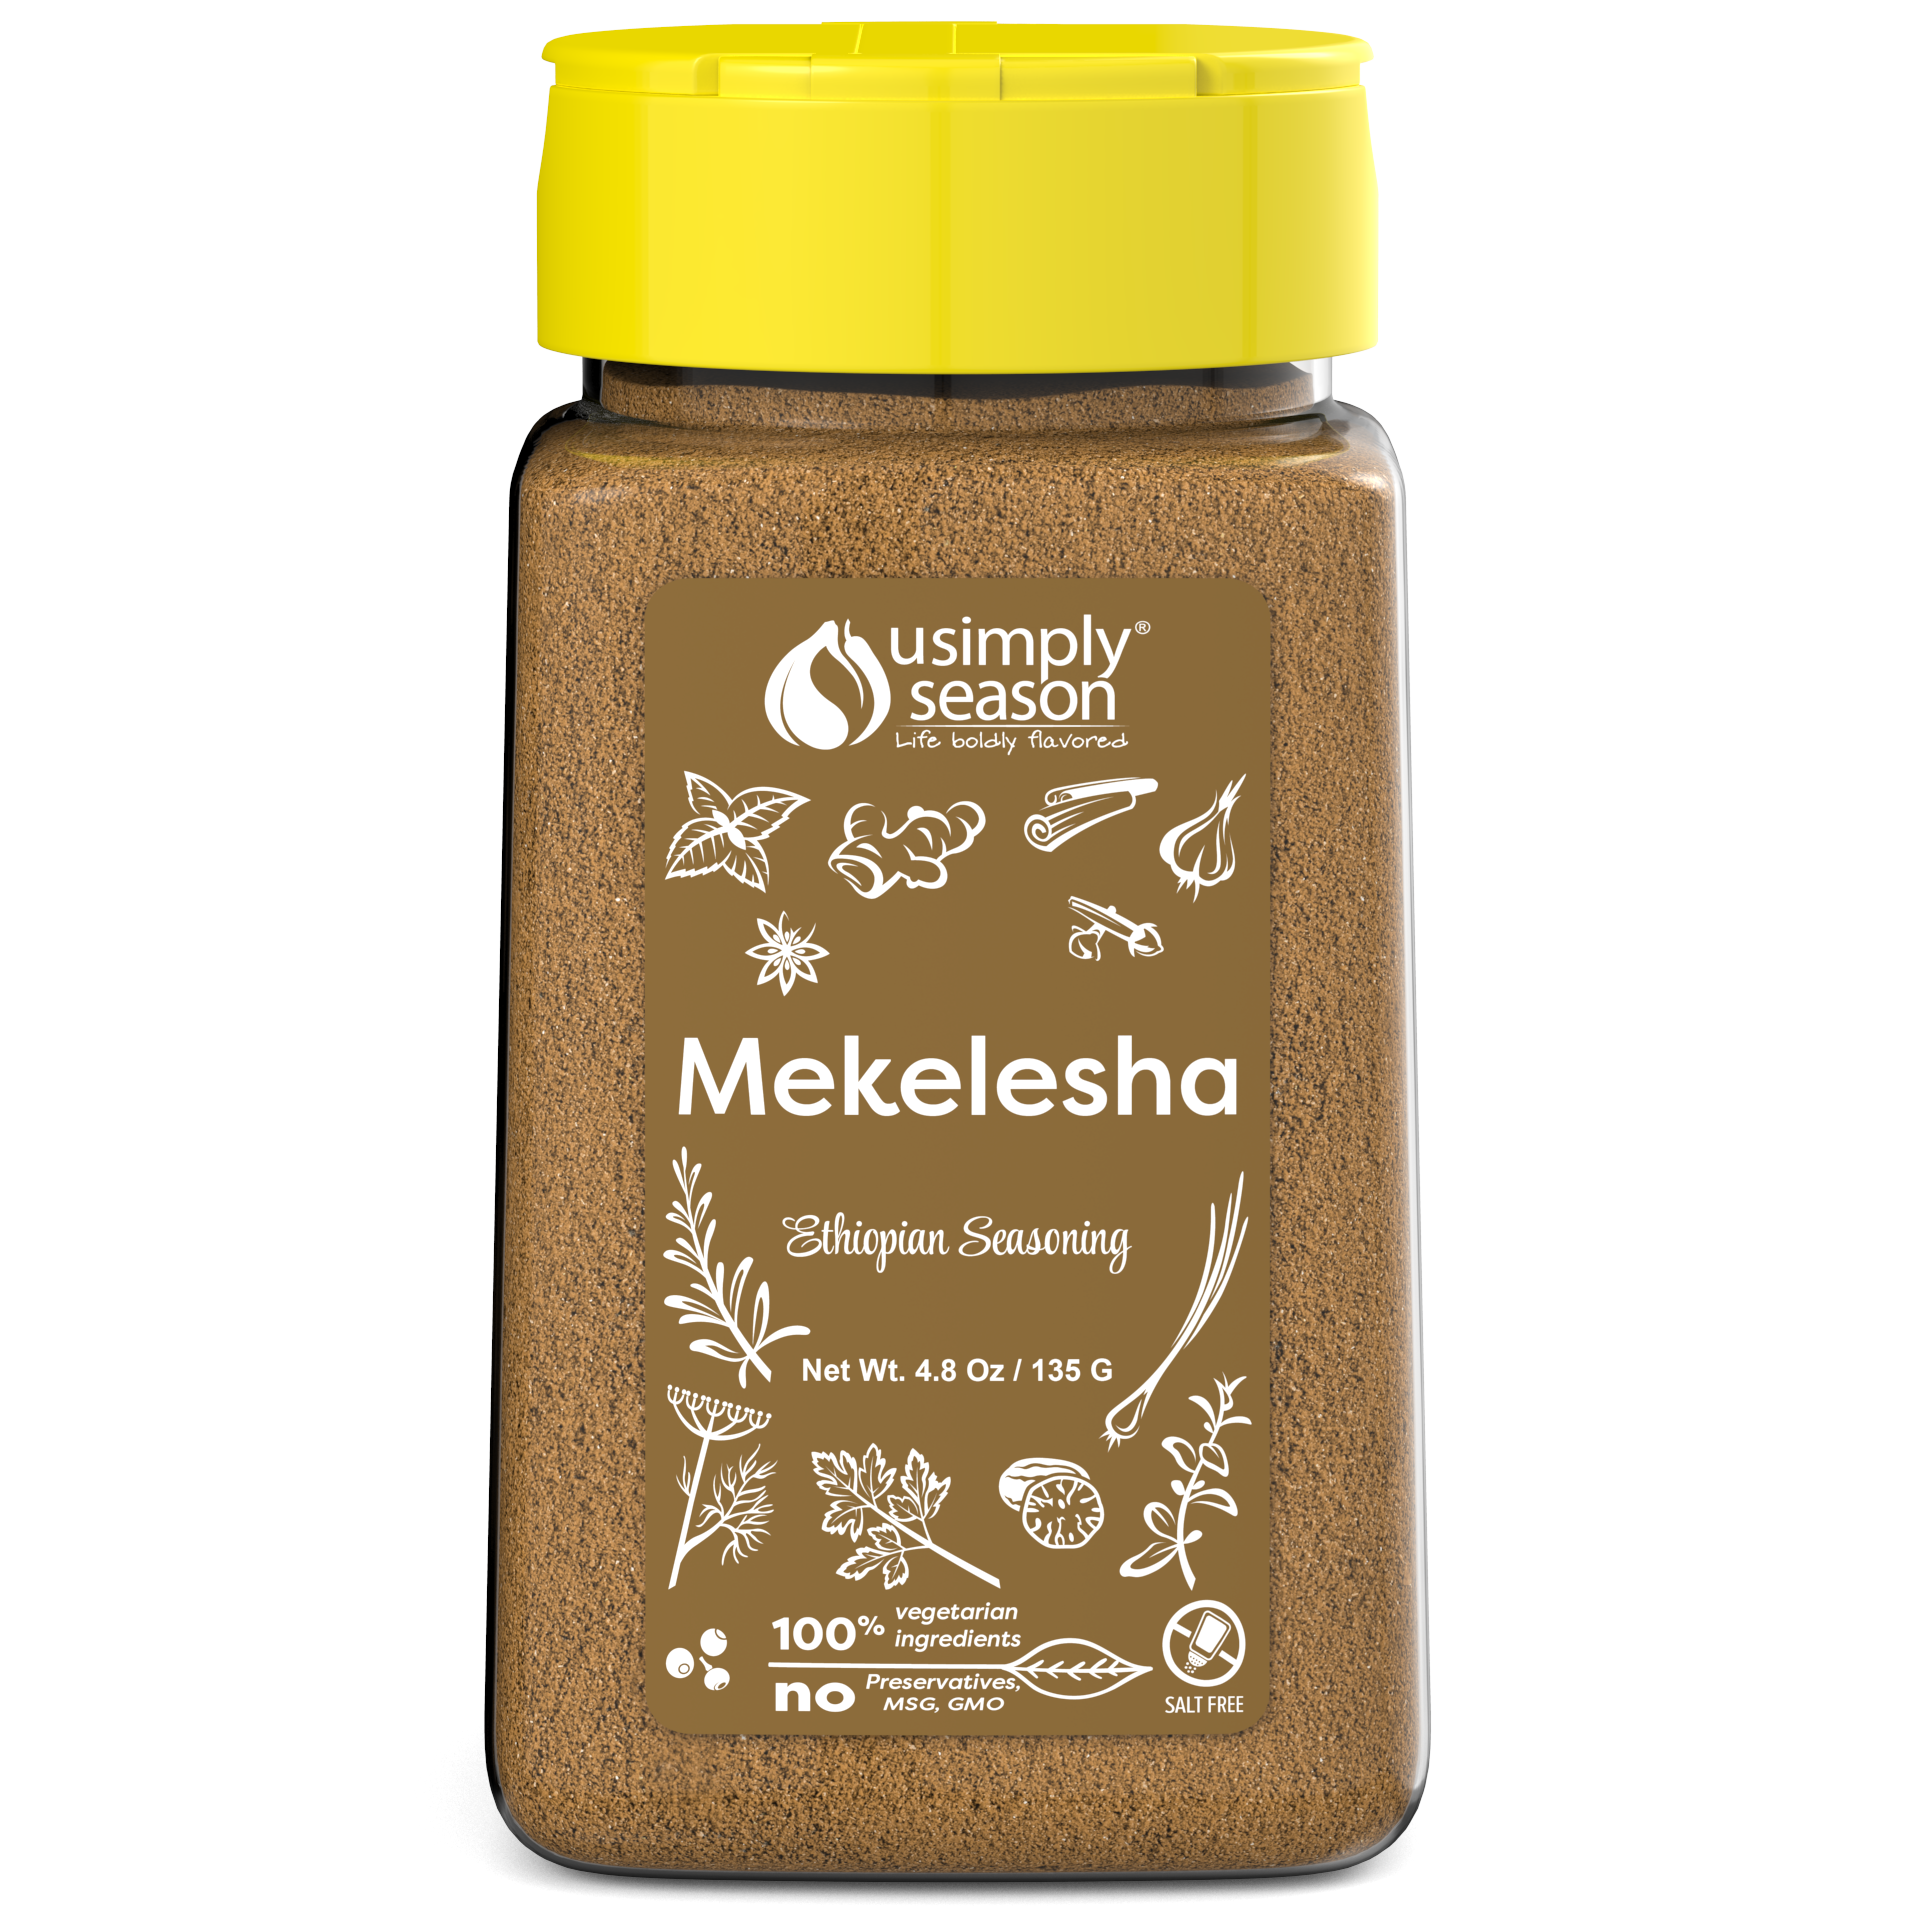 USimply Season Mekelesha Spice Blend - Warm Ethiopian Seasoning, 4.8oz